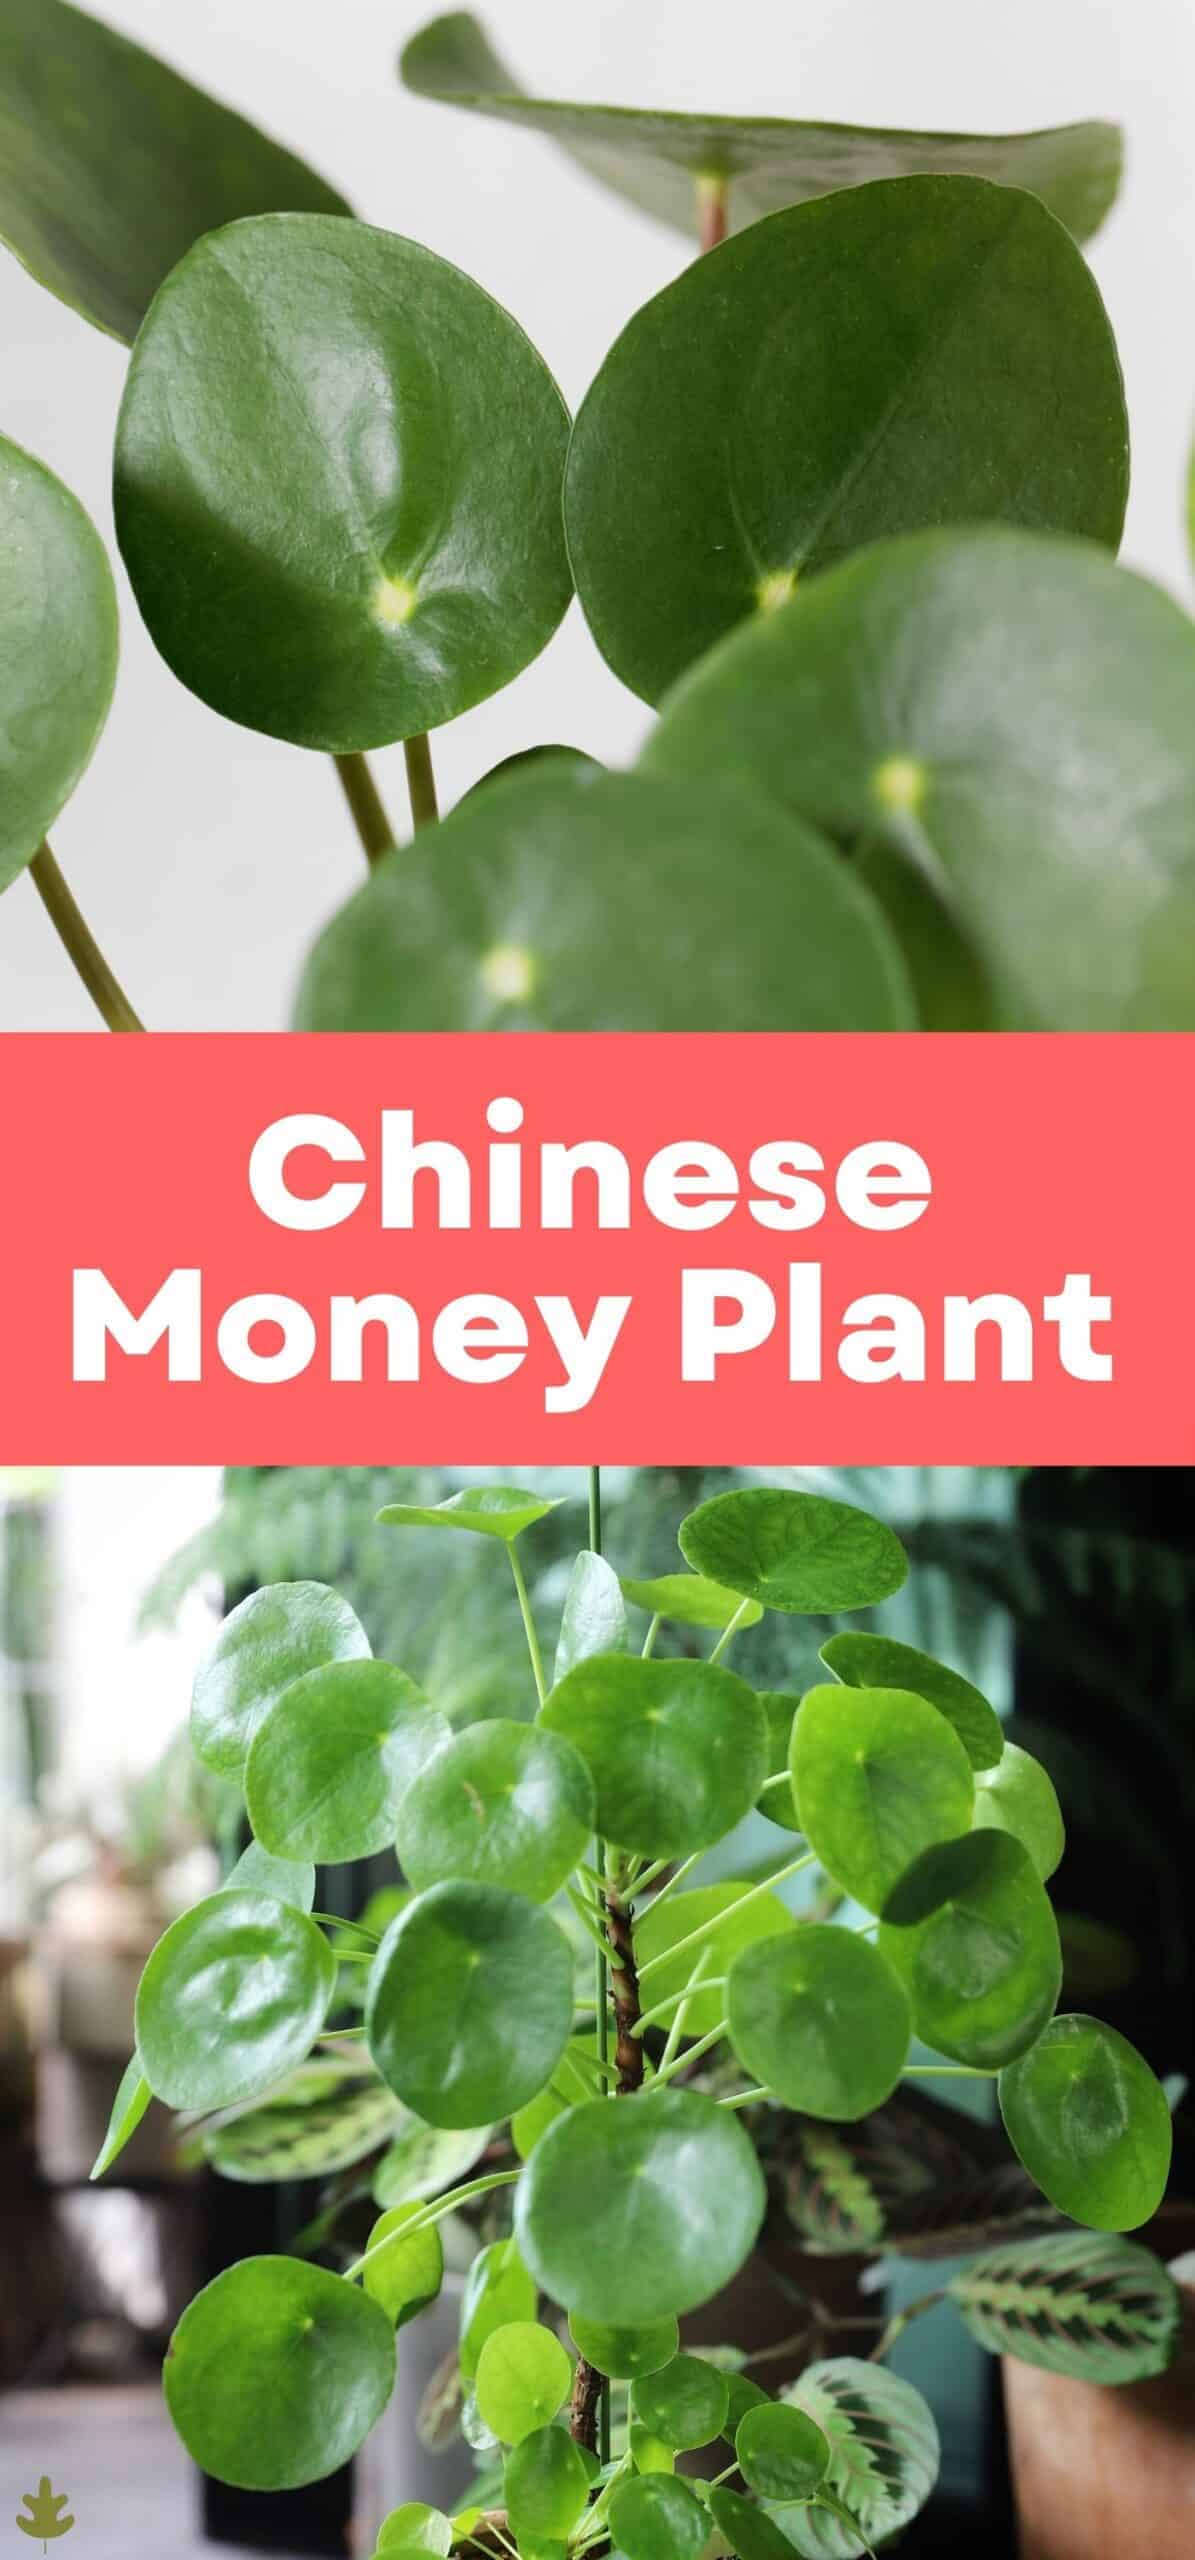 Chinese Money Plant via @home4theharvest